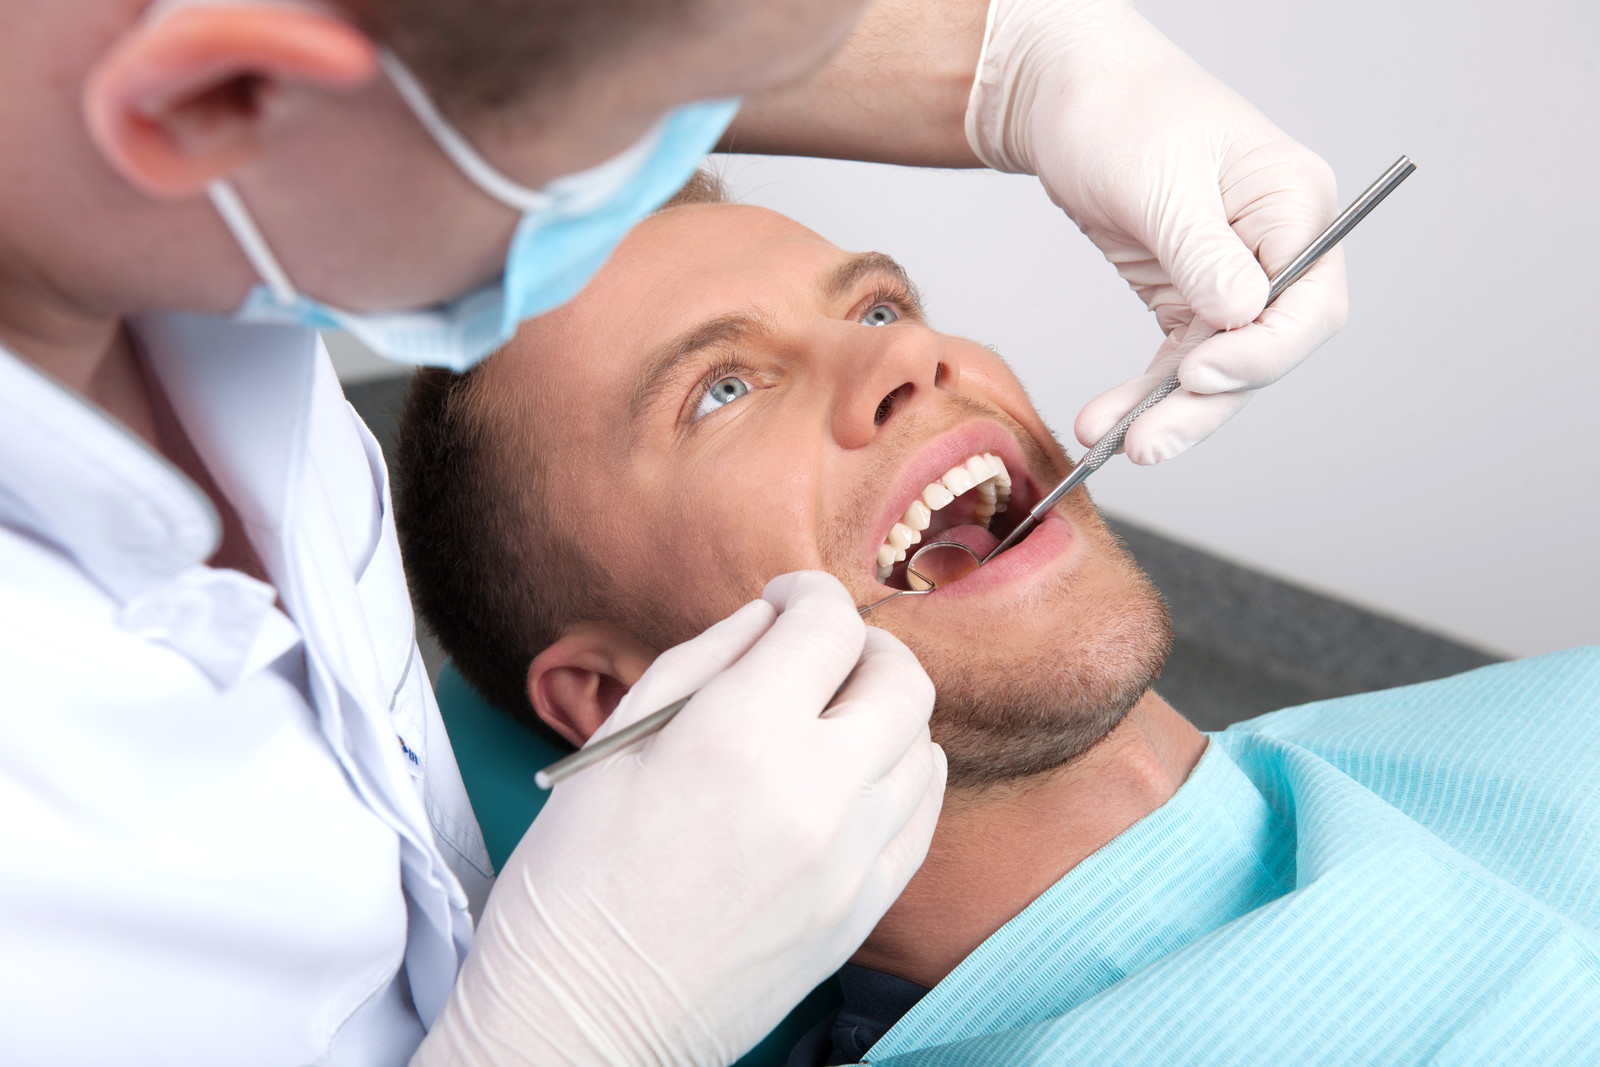 endodontic treatment and retreatment